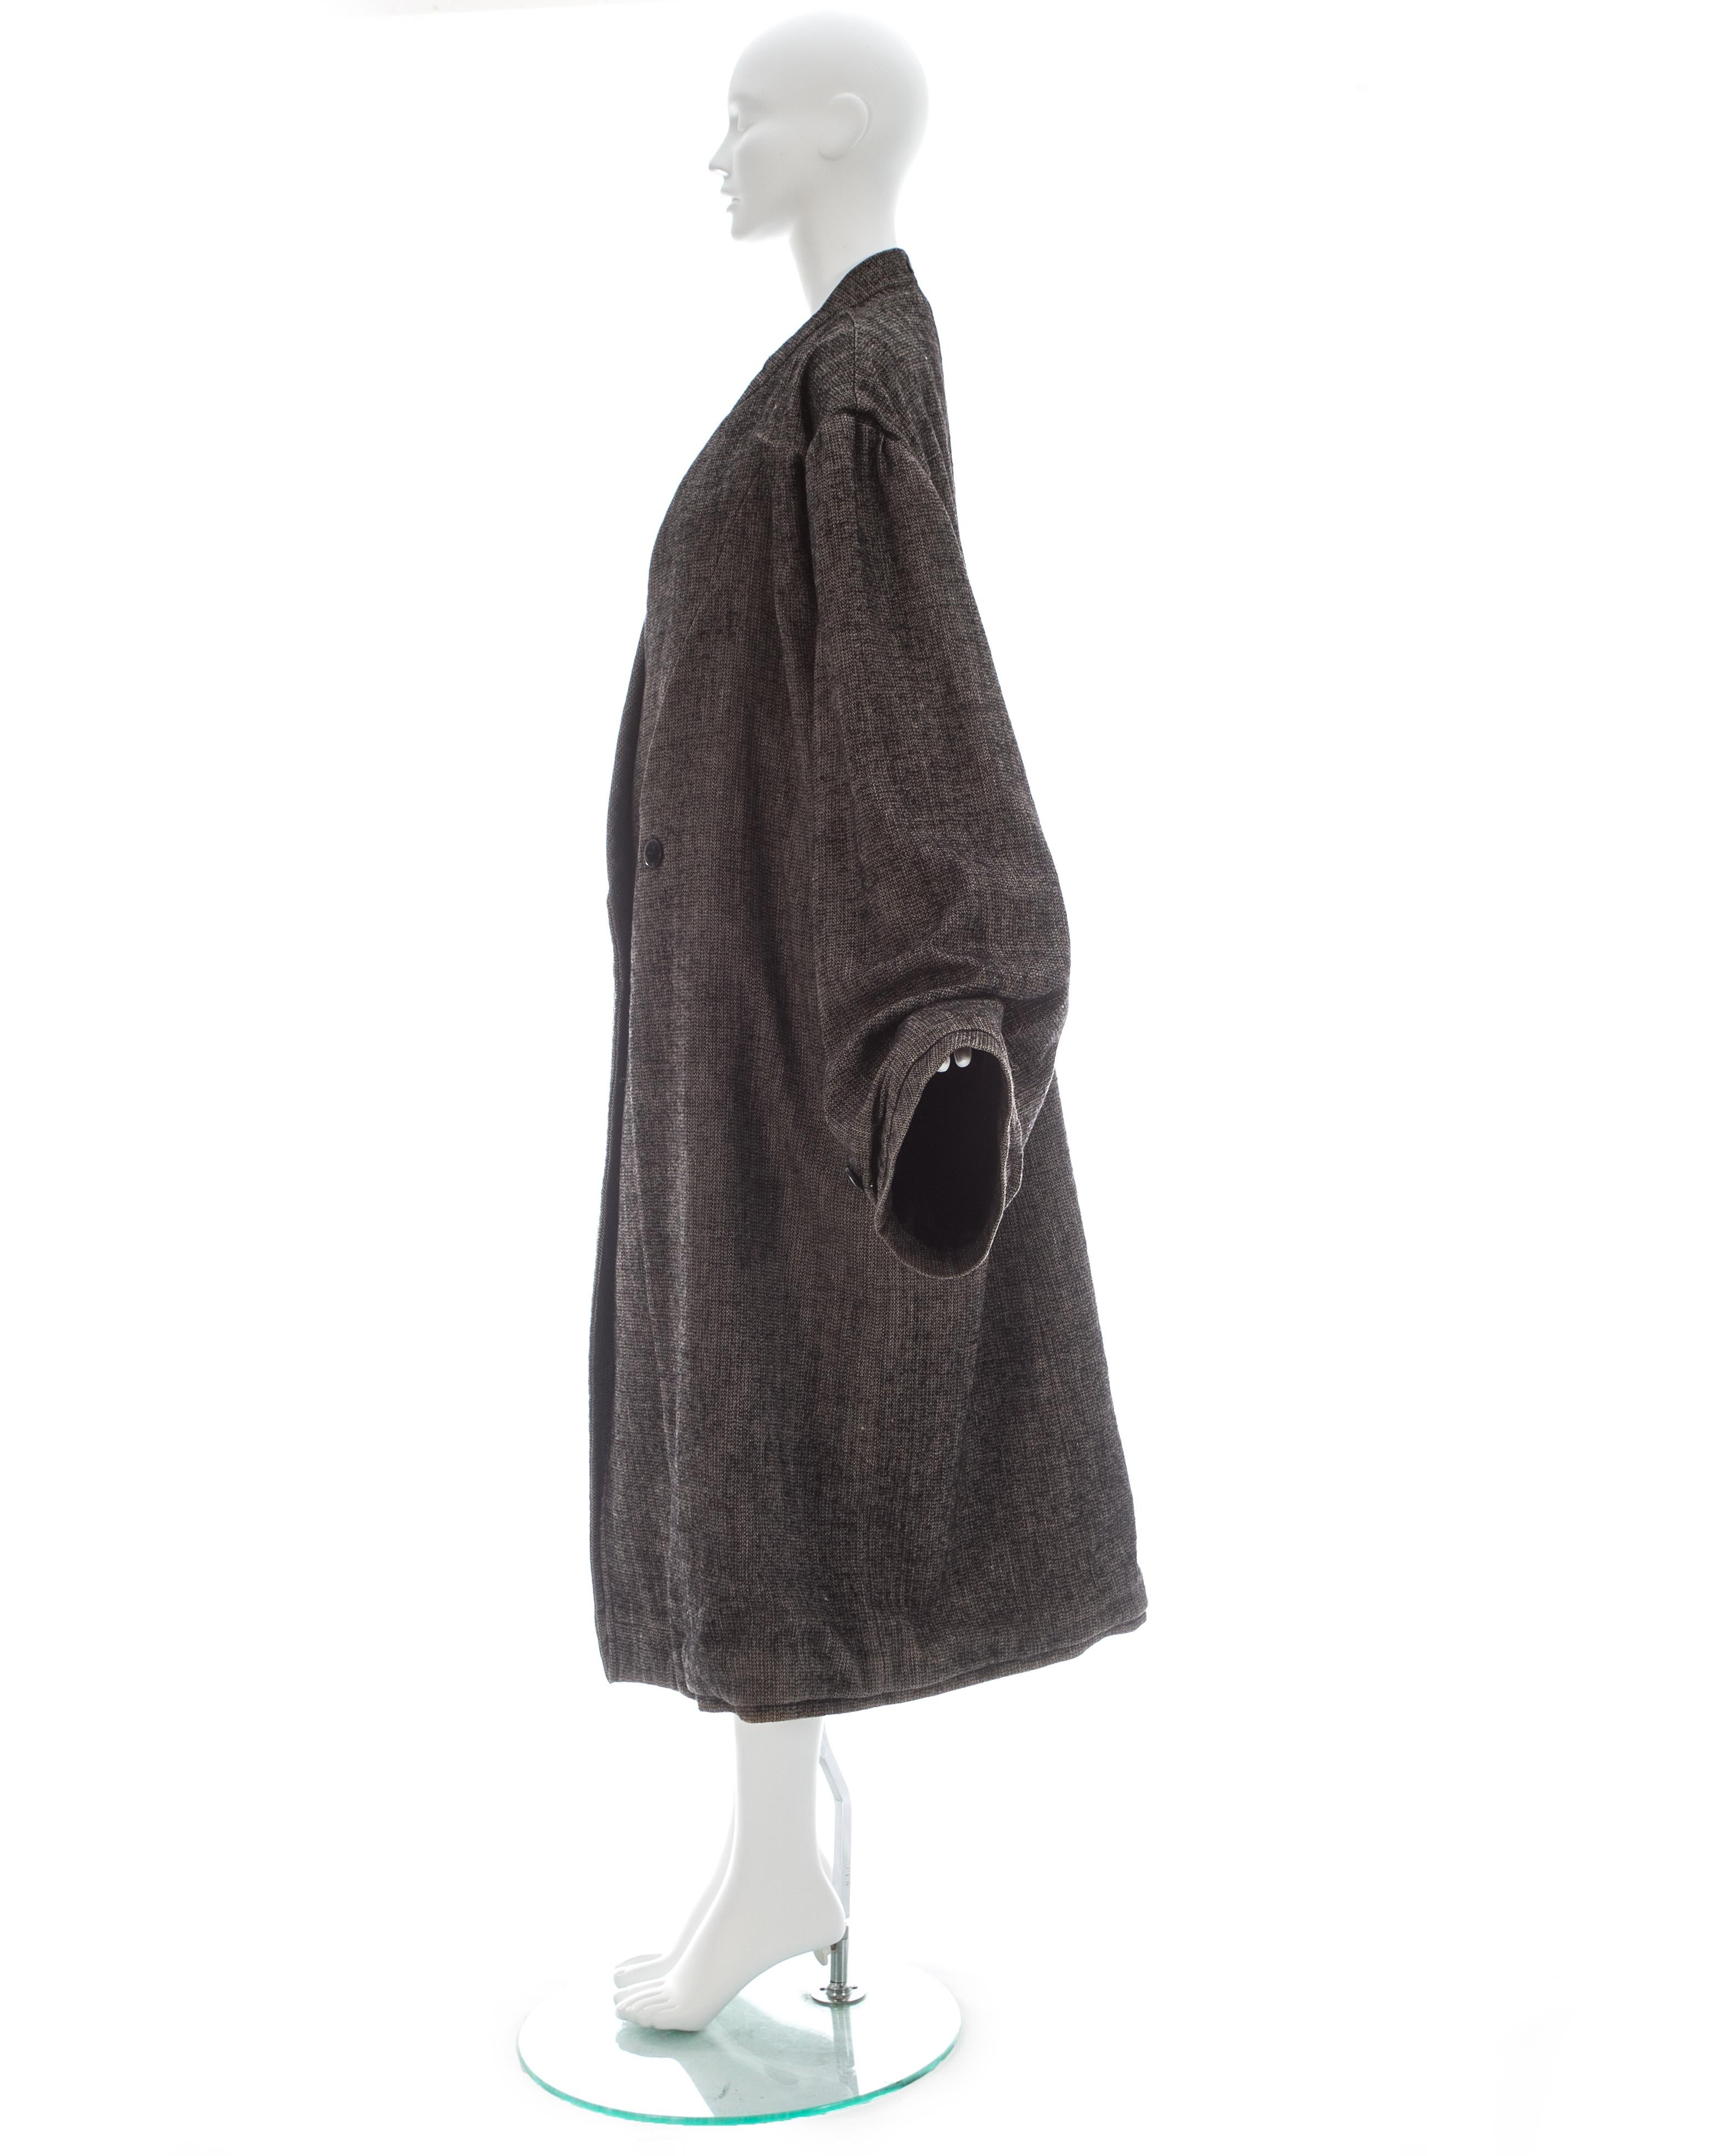 Martin Margiela grey wool and linen XXL size 78 double inside coat, fw 2000 2